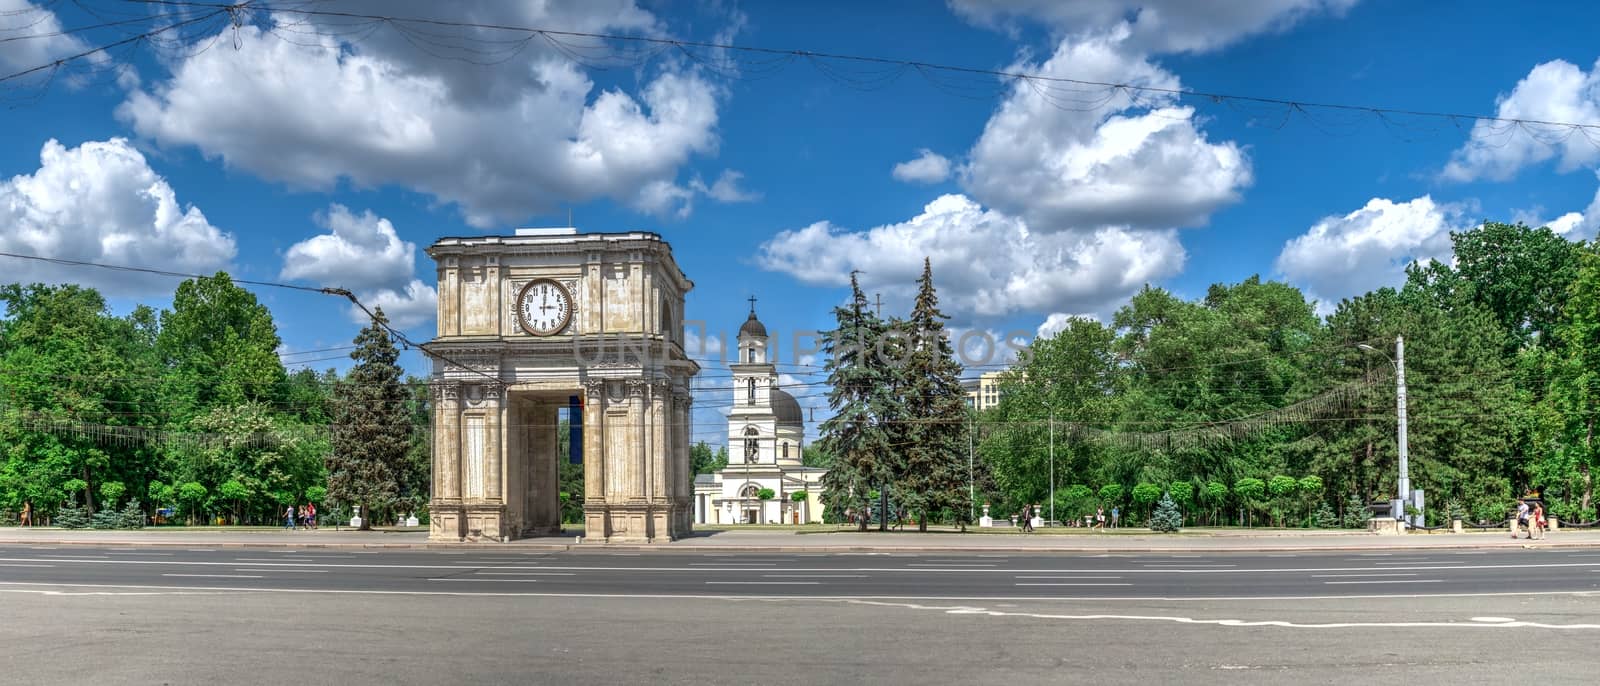 Chisinau, Moldova – 06.28.2019. Stefan cel Mare Boulevard in the center of Chisinau, capital of Moldova, on a sunny summer day